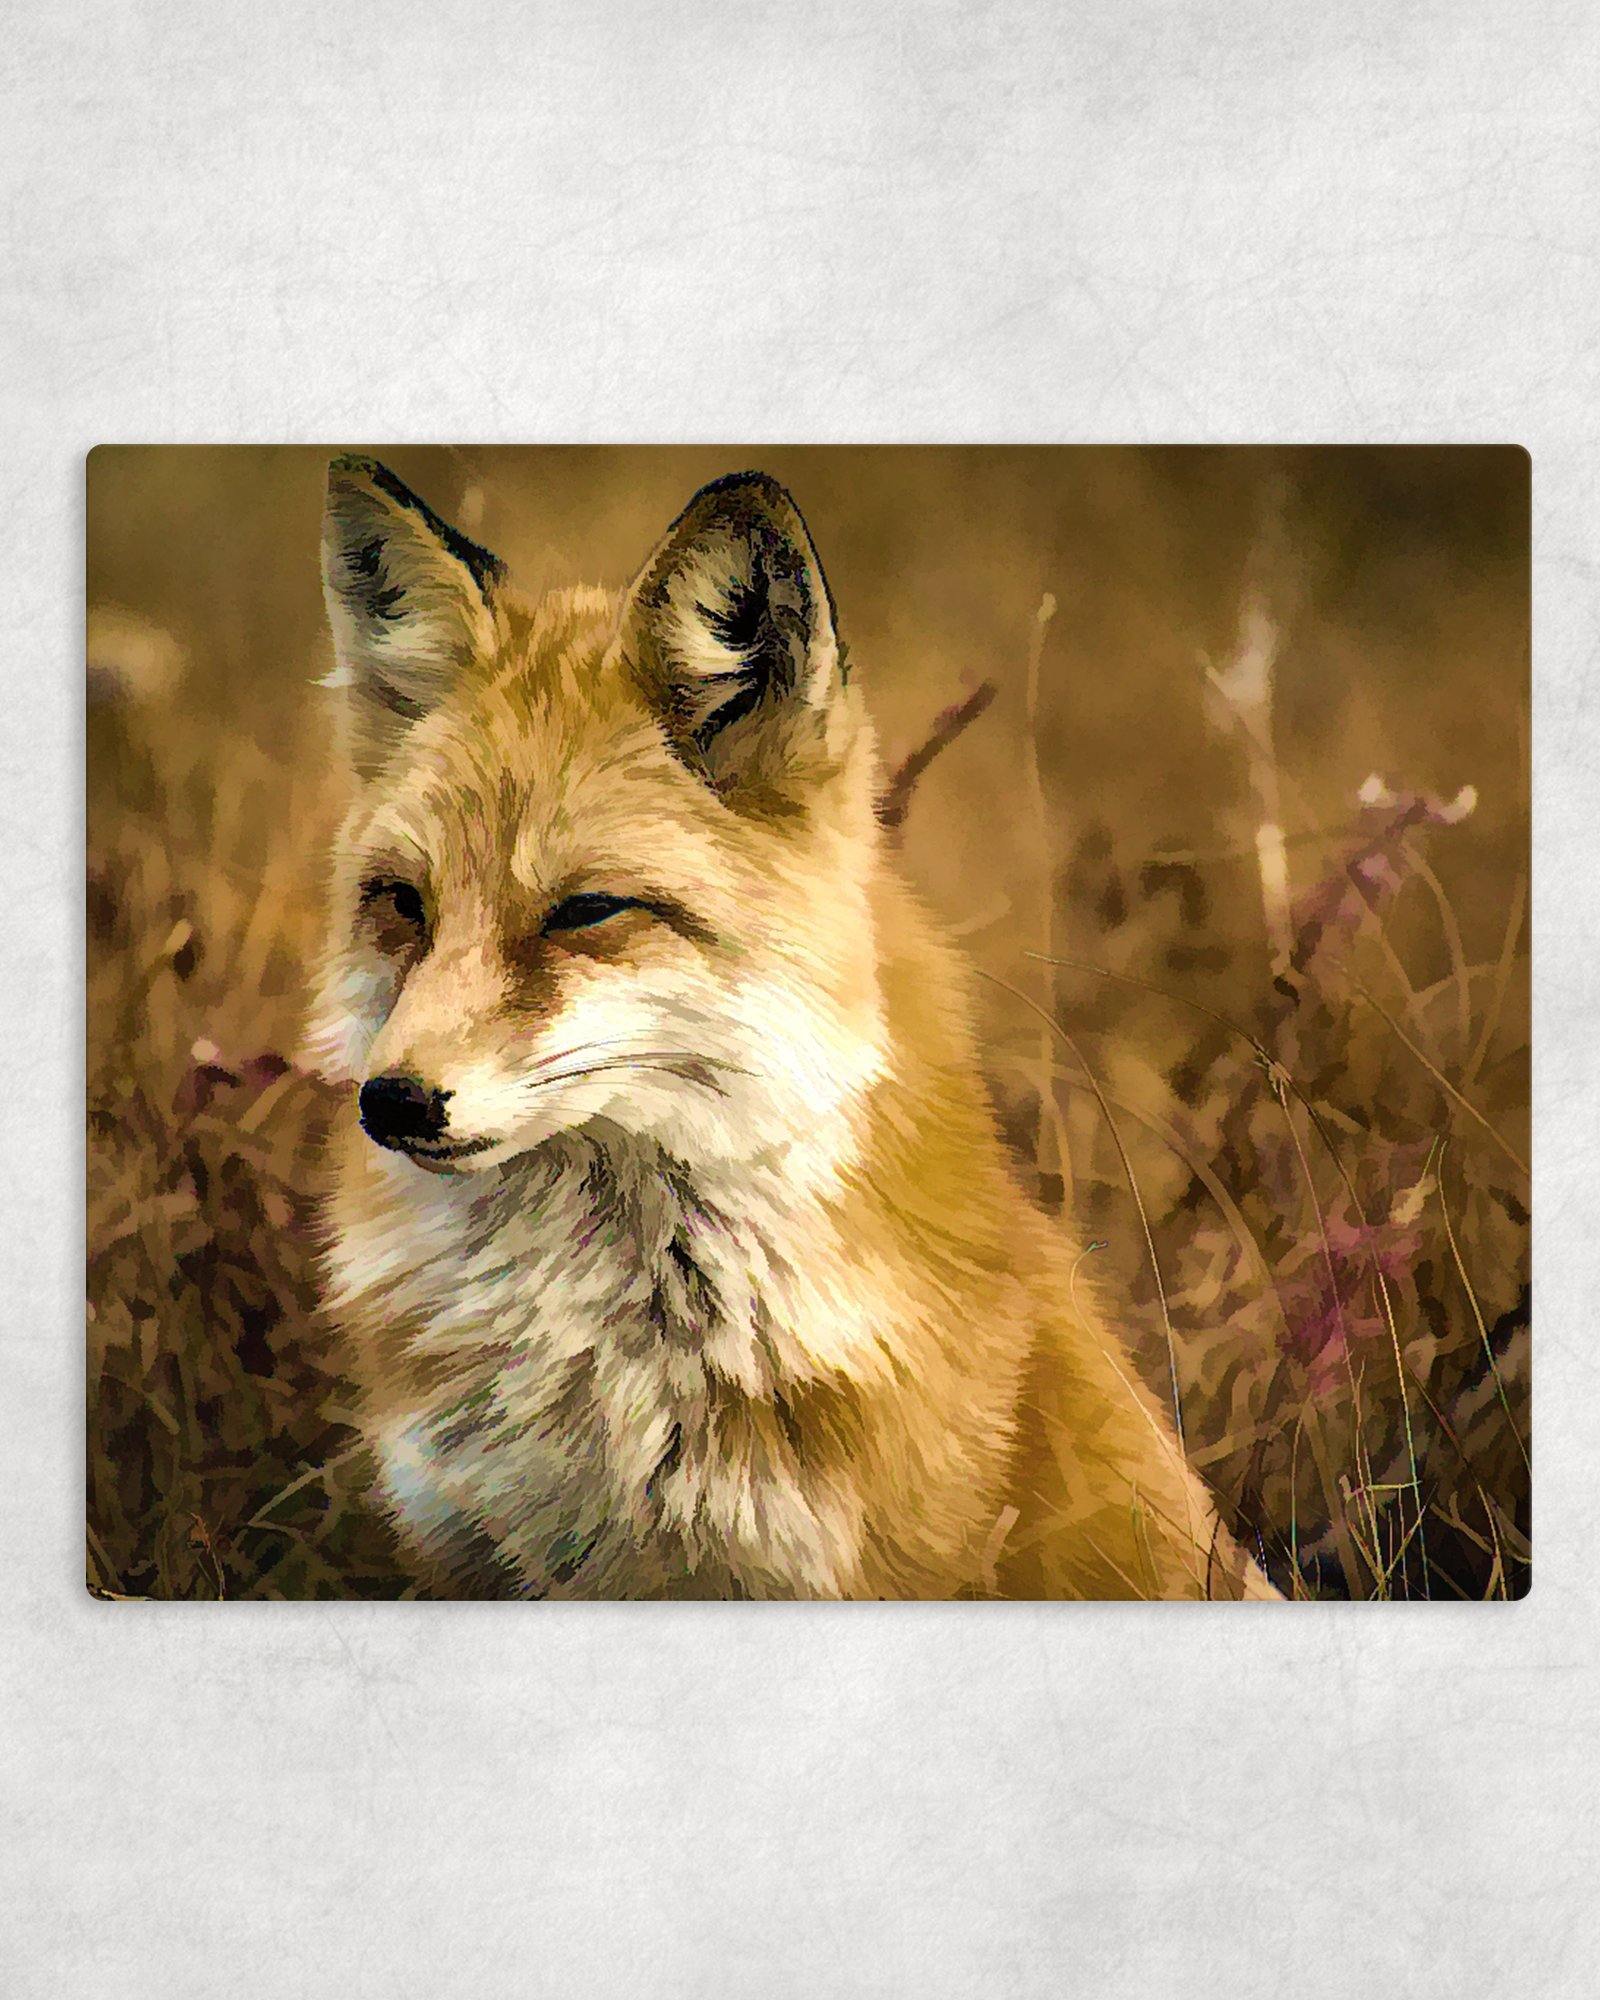 Red Fox Metal Photo Panel - 8x10 - Schoppix Gifts